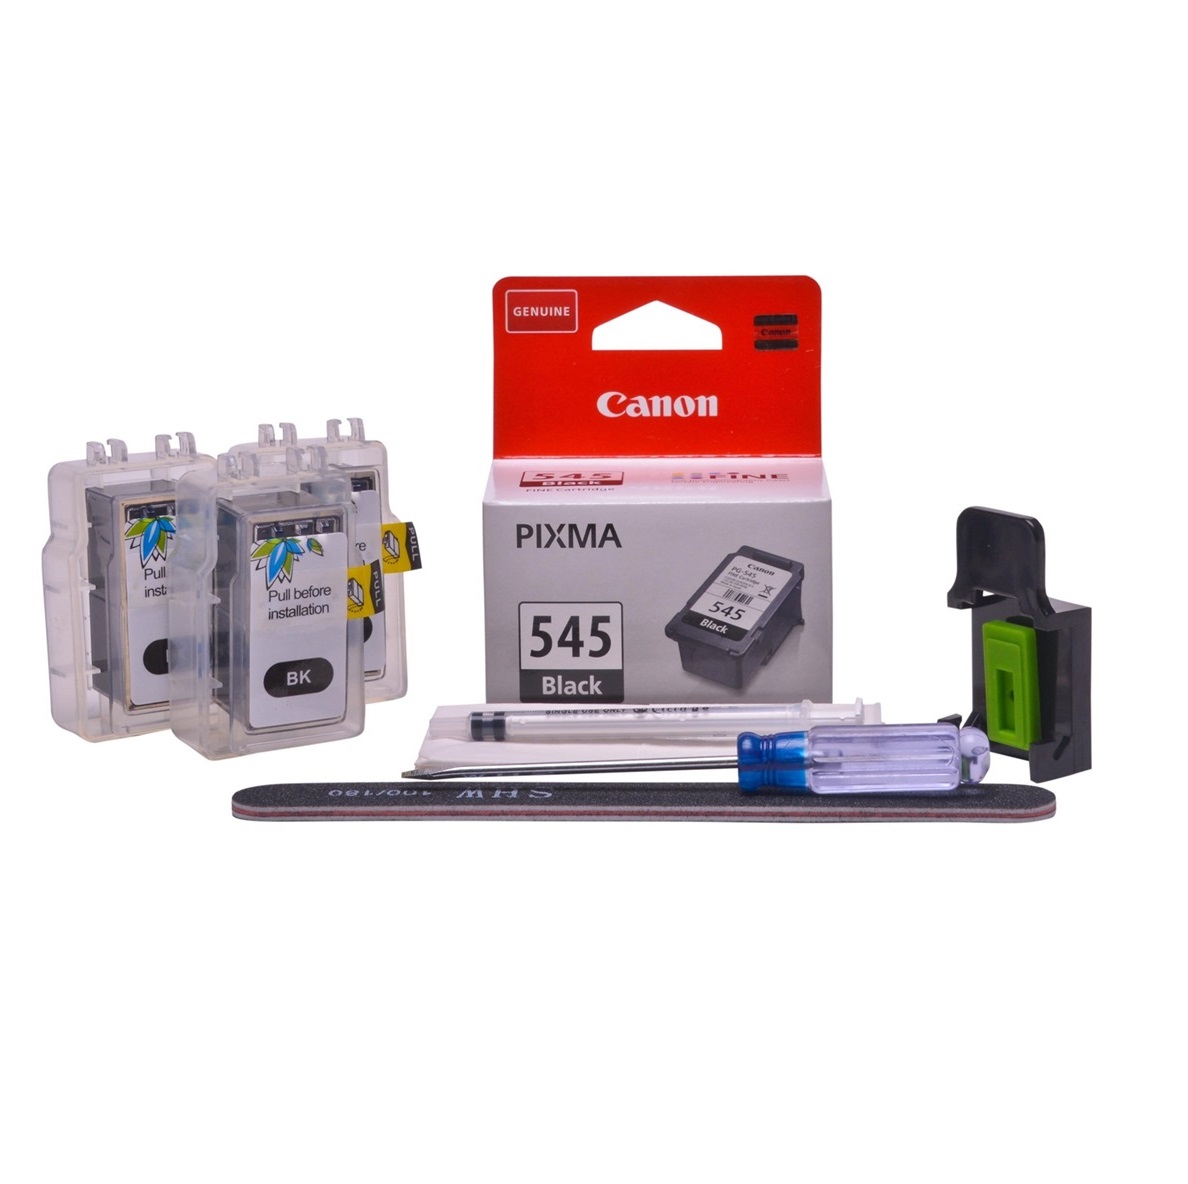 Refillable pigment Cheap printer cartridges for Canon Pixma TS3450 8287B001  PG-545 Pigment Black